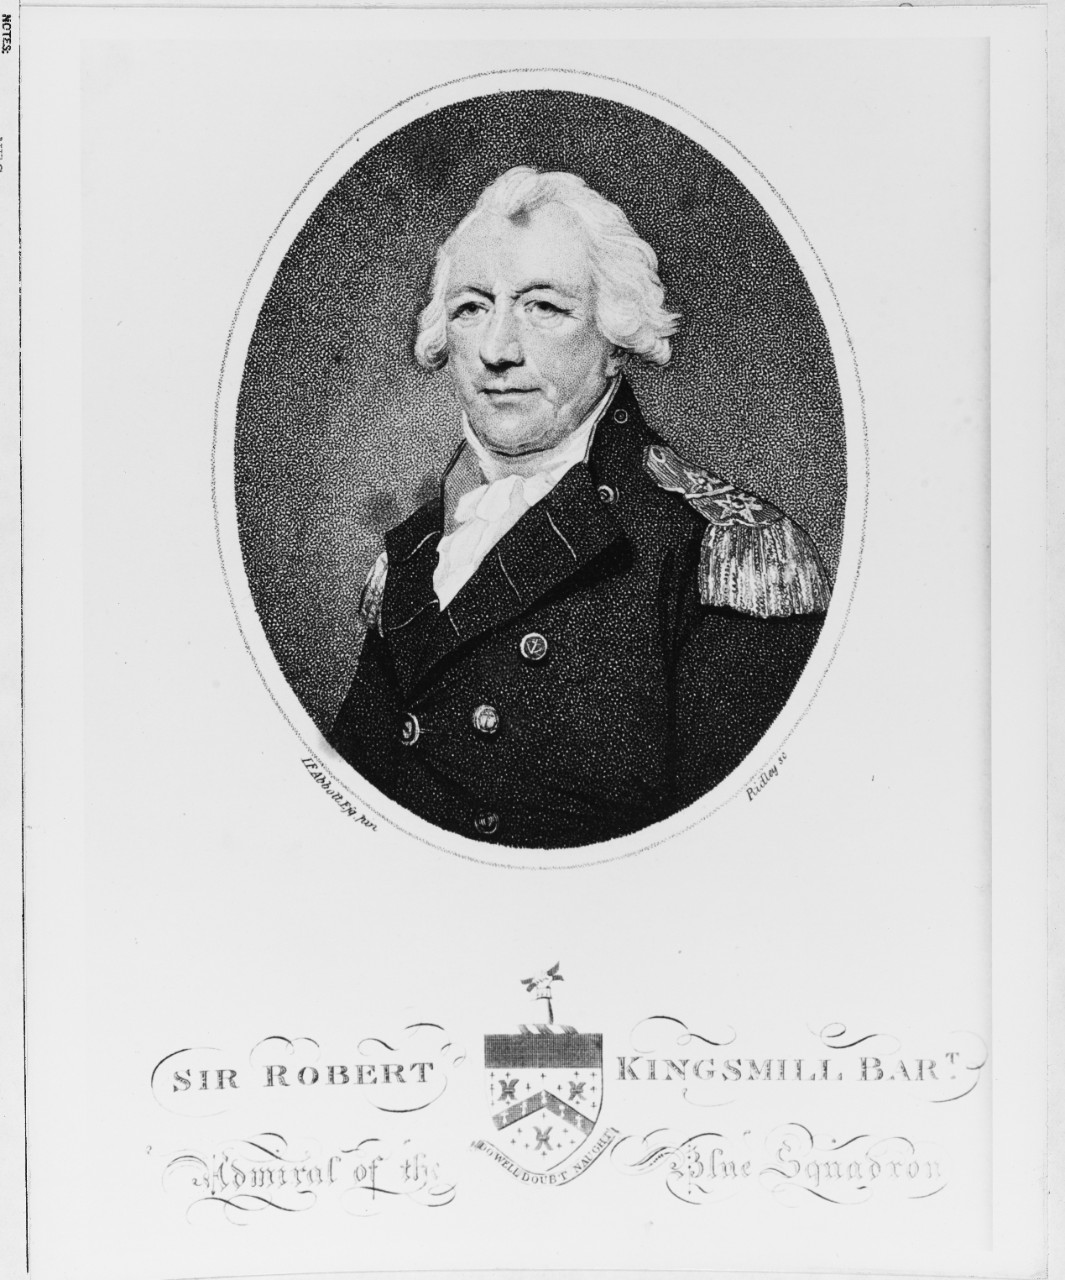 Robert Kingsmill (1730-1805), British Naval Officer